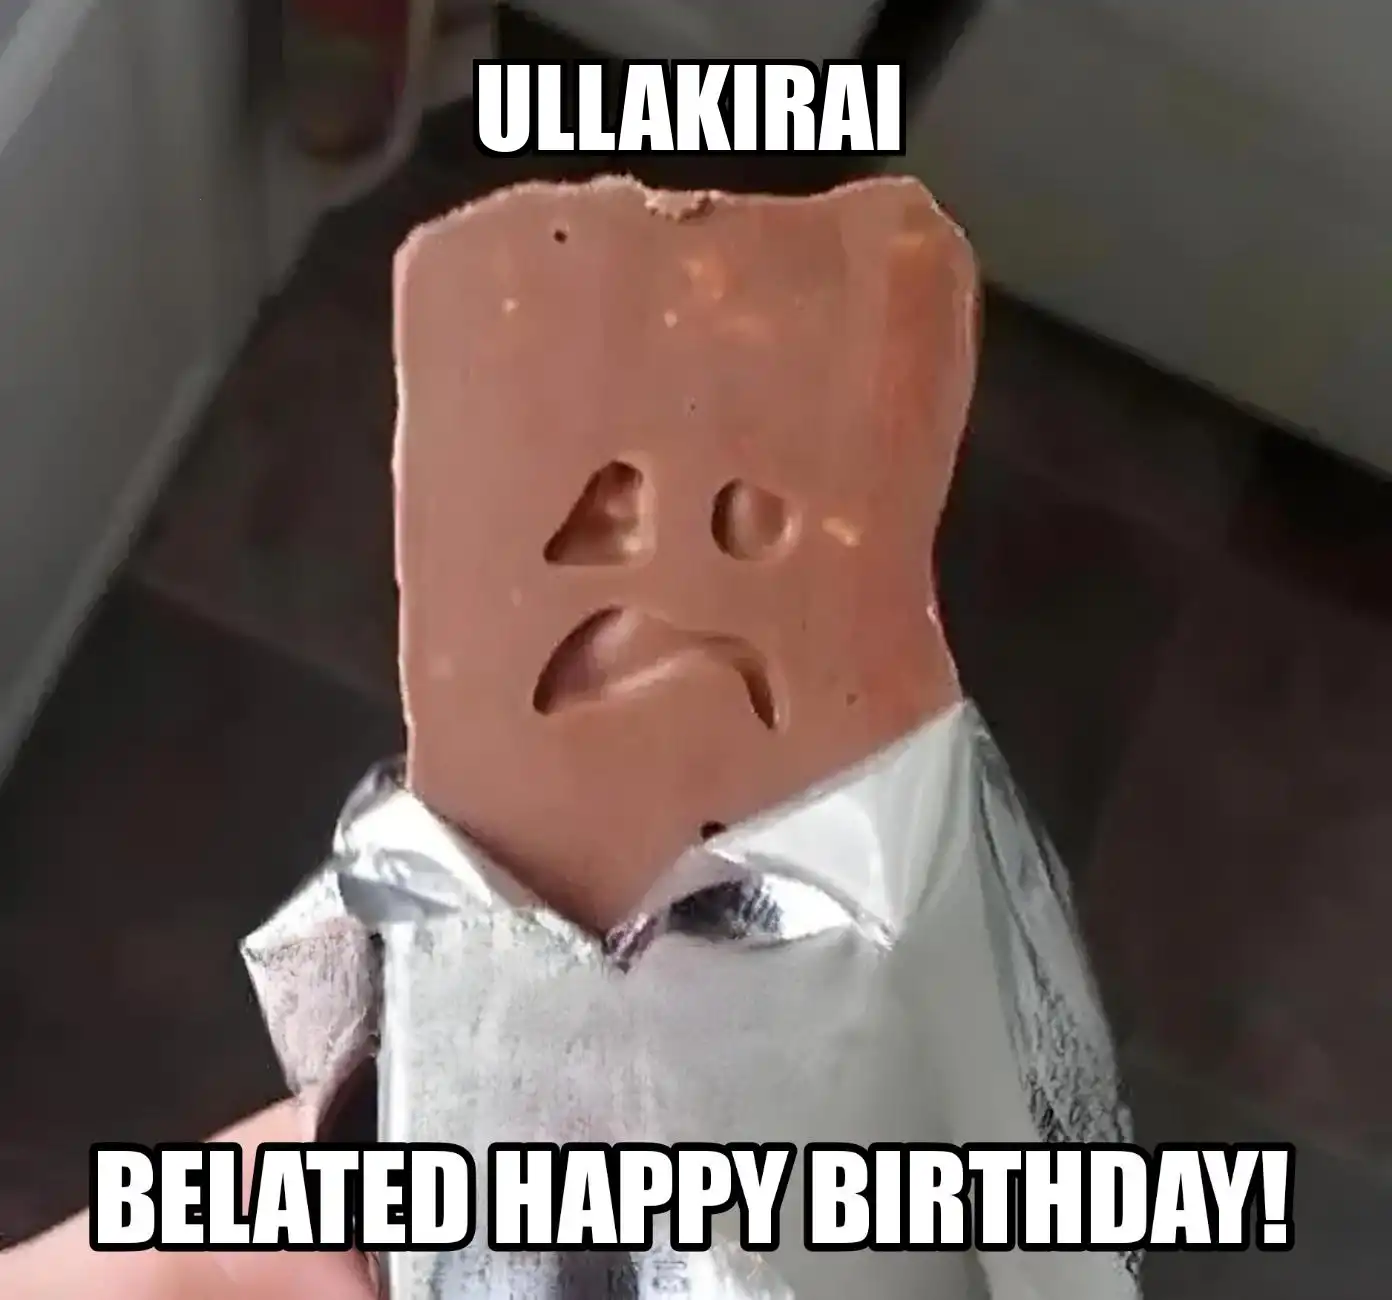 Happy Birthday Ullakirai Belated Happy Birthday Meme